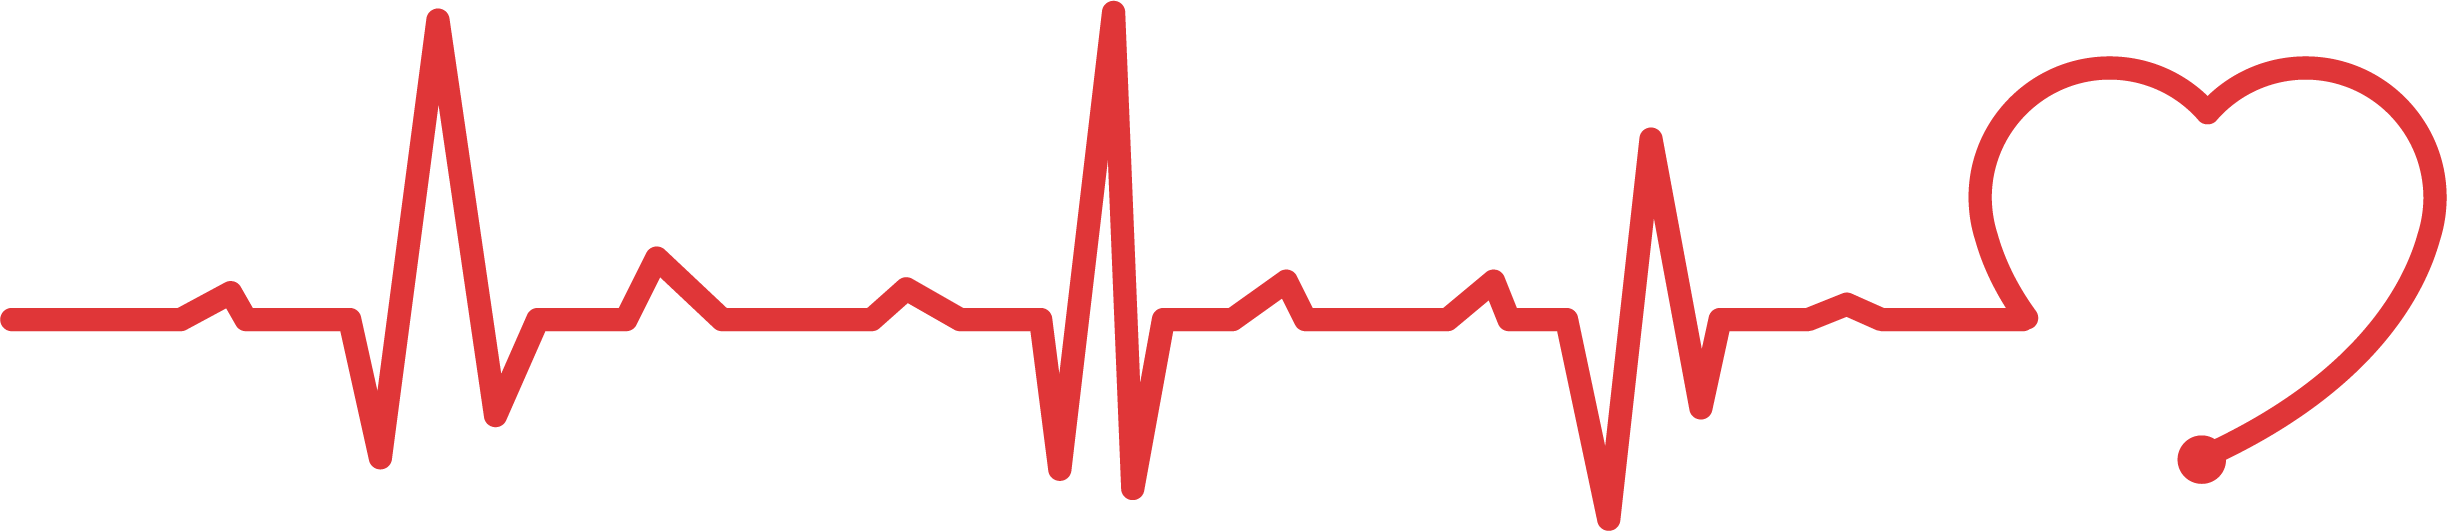 Heartbeat ECG Transparant Beeld